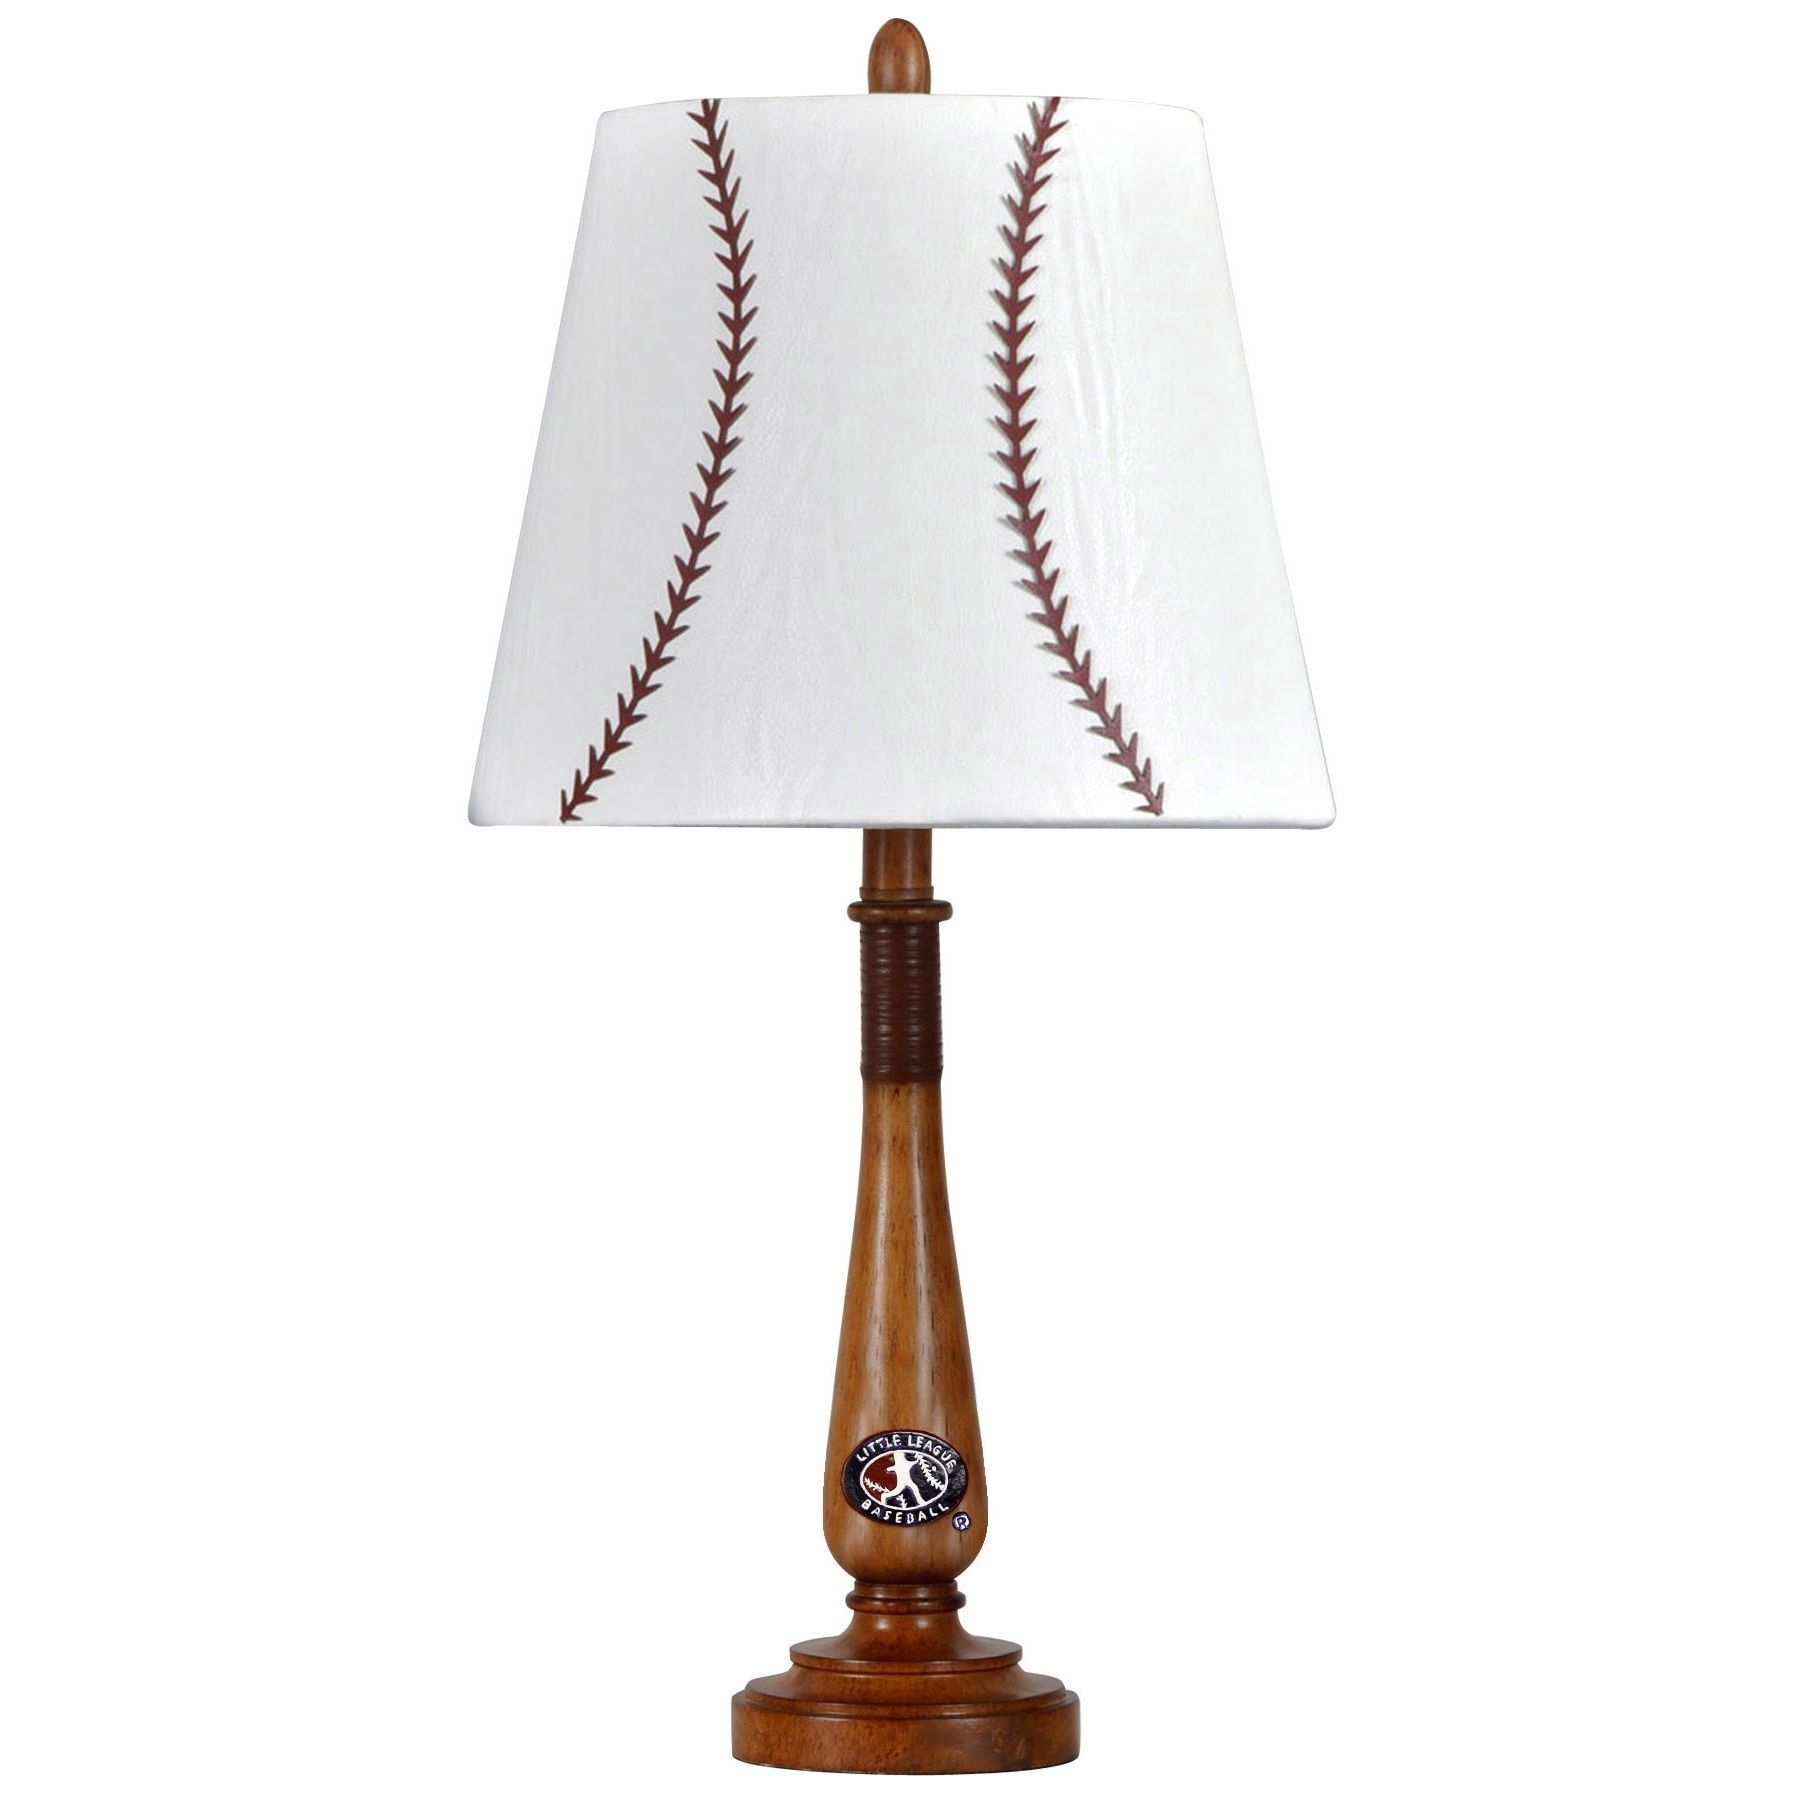 Baseball Table Lamp